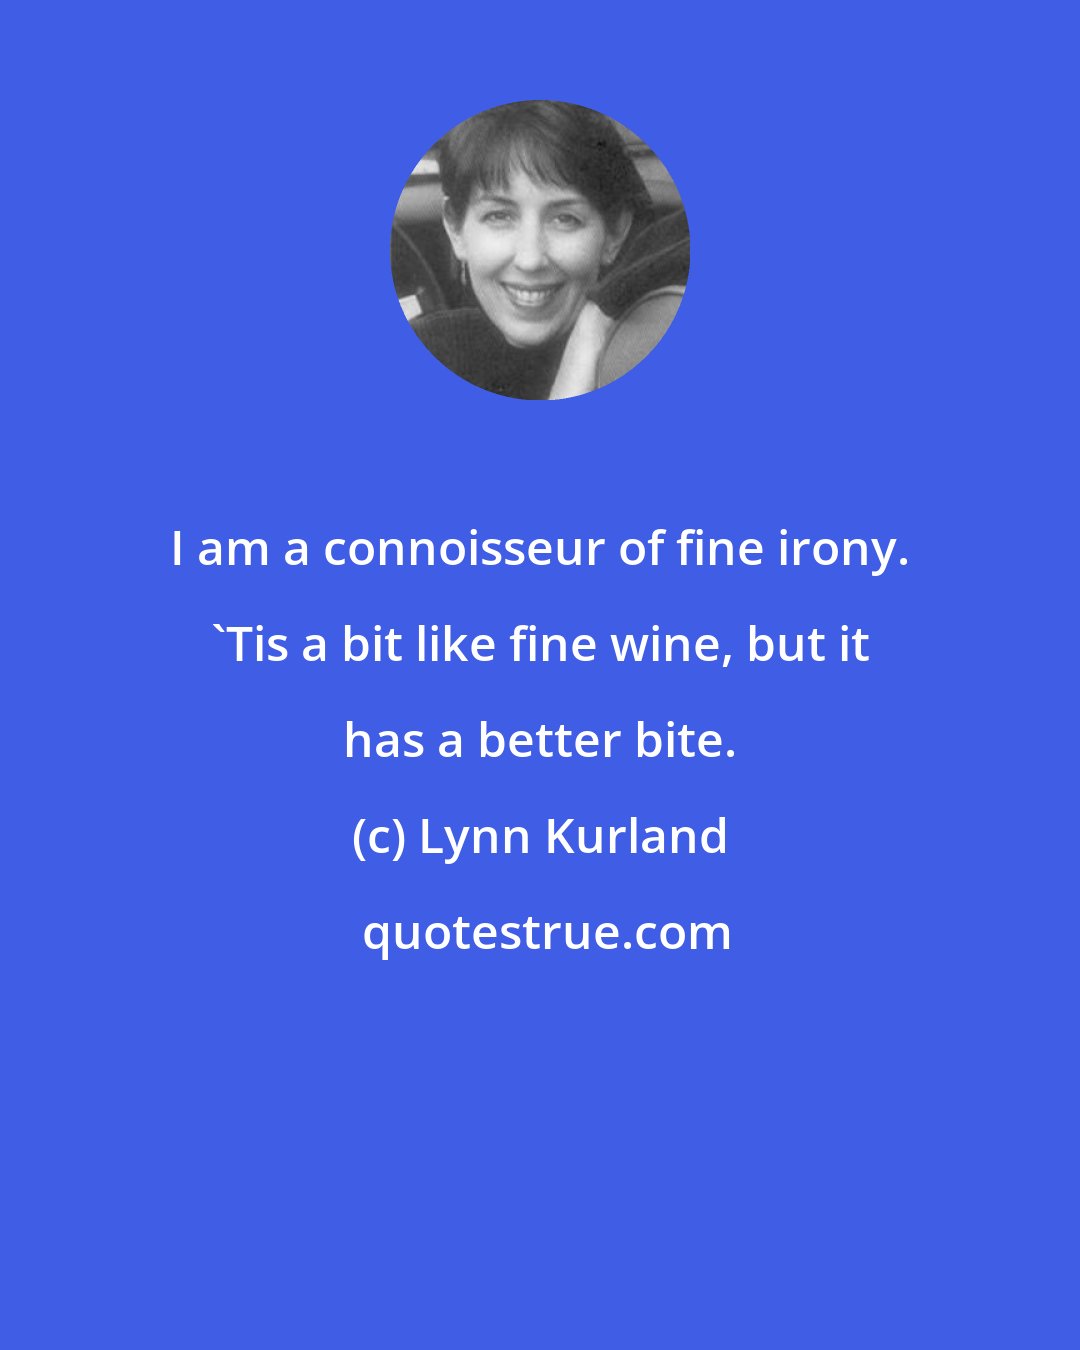 Lynn Kurland: I am a connoisseur of fine irony. 'Tis a bit like fine wine, but it has a better bite.